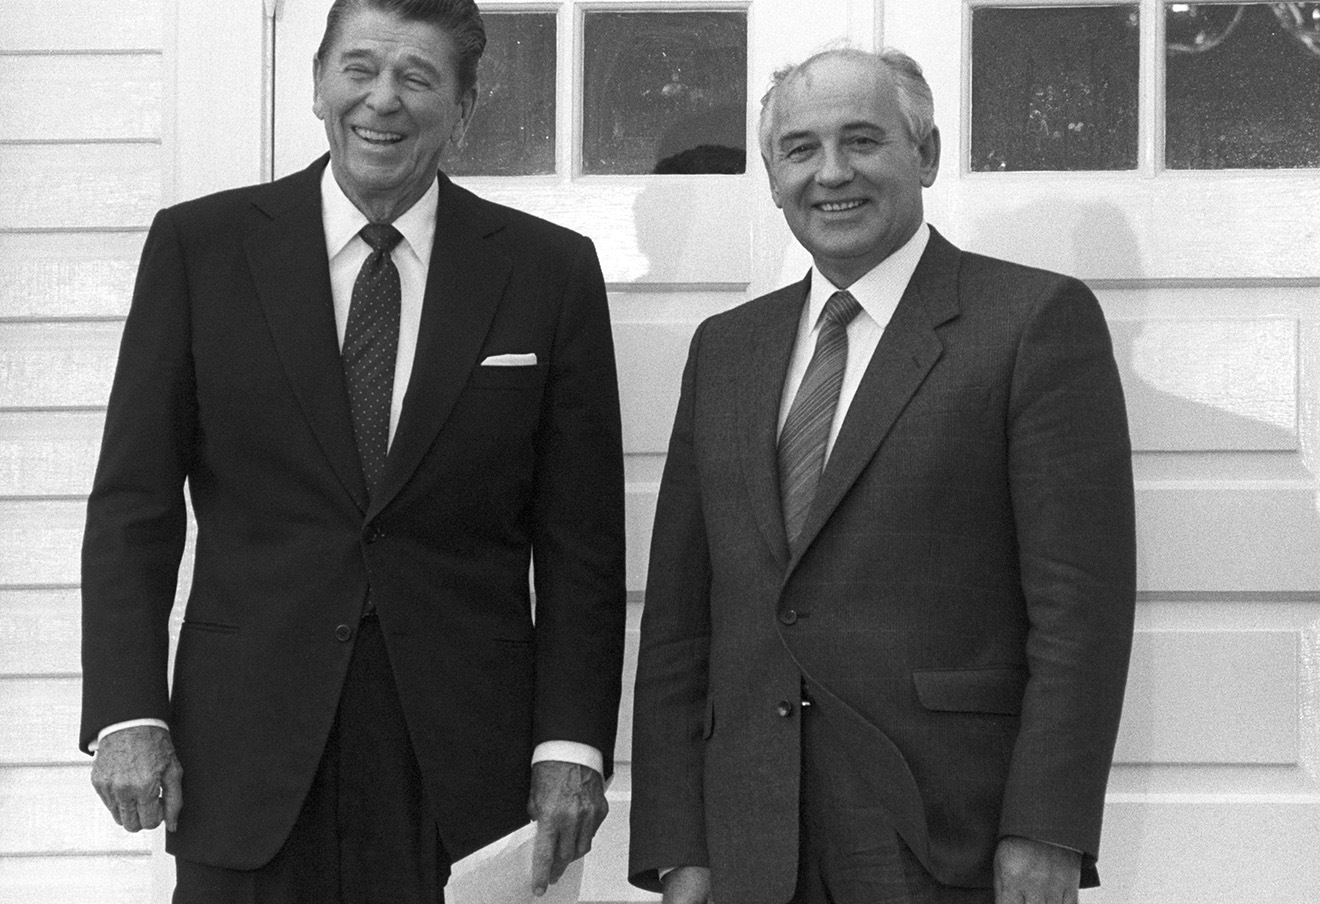 Переговоры с рейганом. Горбачёв Рейган Рейкьявик 1986. Переговоры Горбачева и Рейгана в Рейкьявике. Горбачёв и Рейган в Рейкьявике. Встреча Горбачева и Рейгана в Рейкьявике 1986.